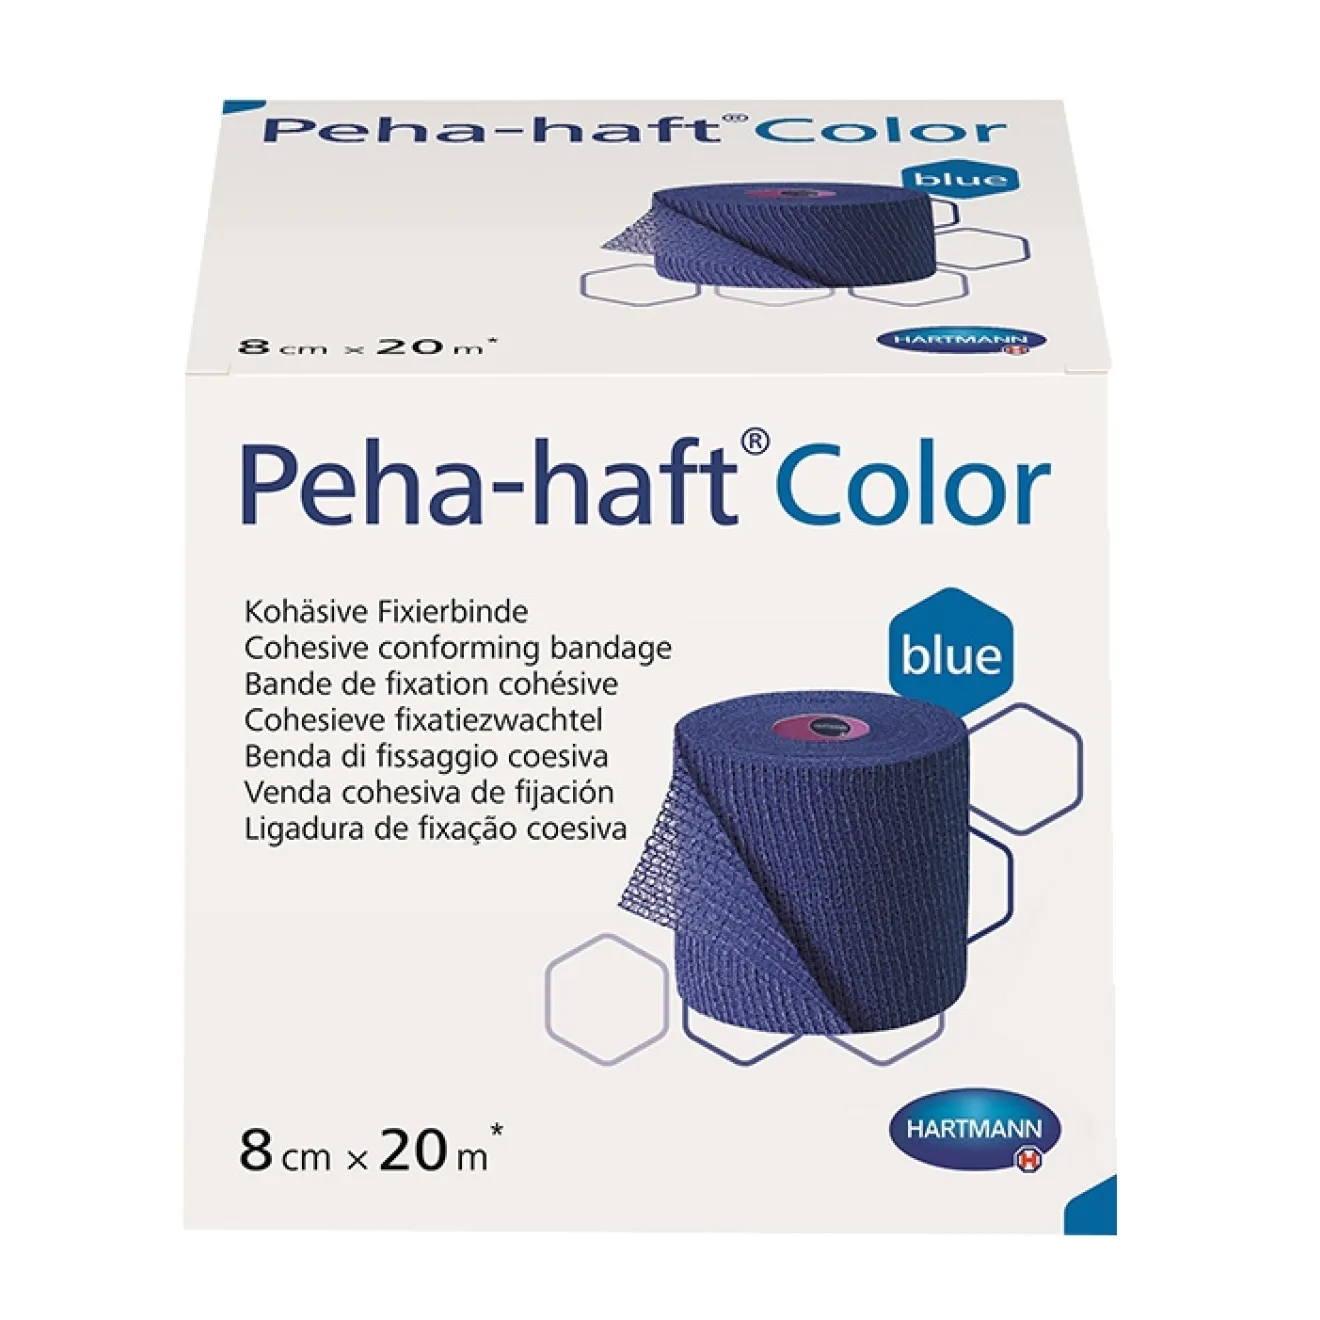 PEHA-HAFT Color Fixierbinde latexfrei 8 cmx20 m BLAU 1 ST 932474